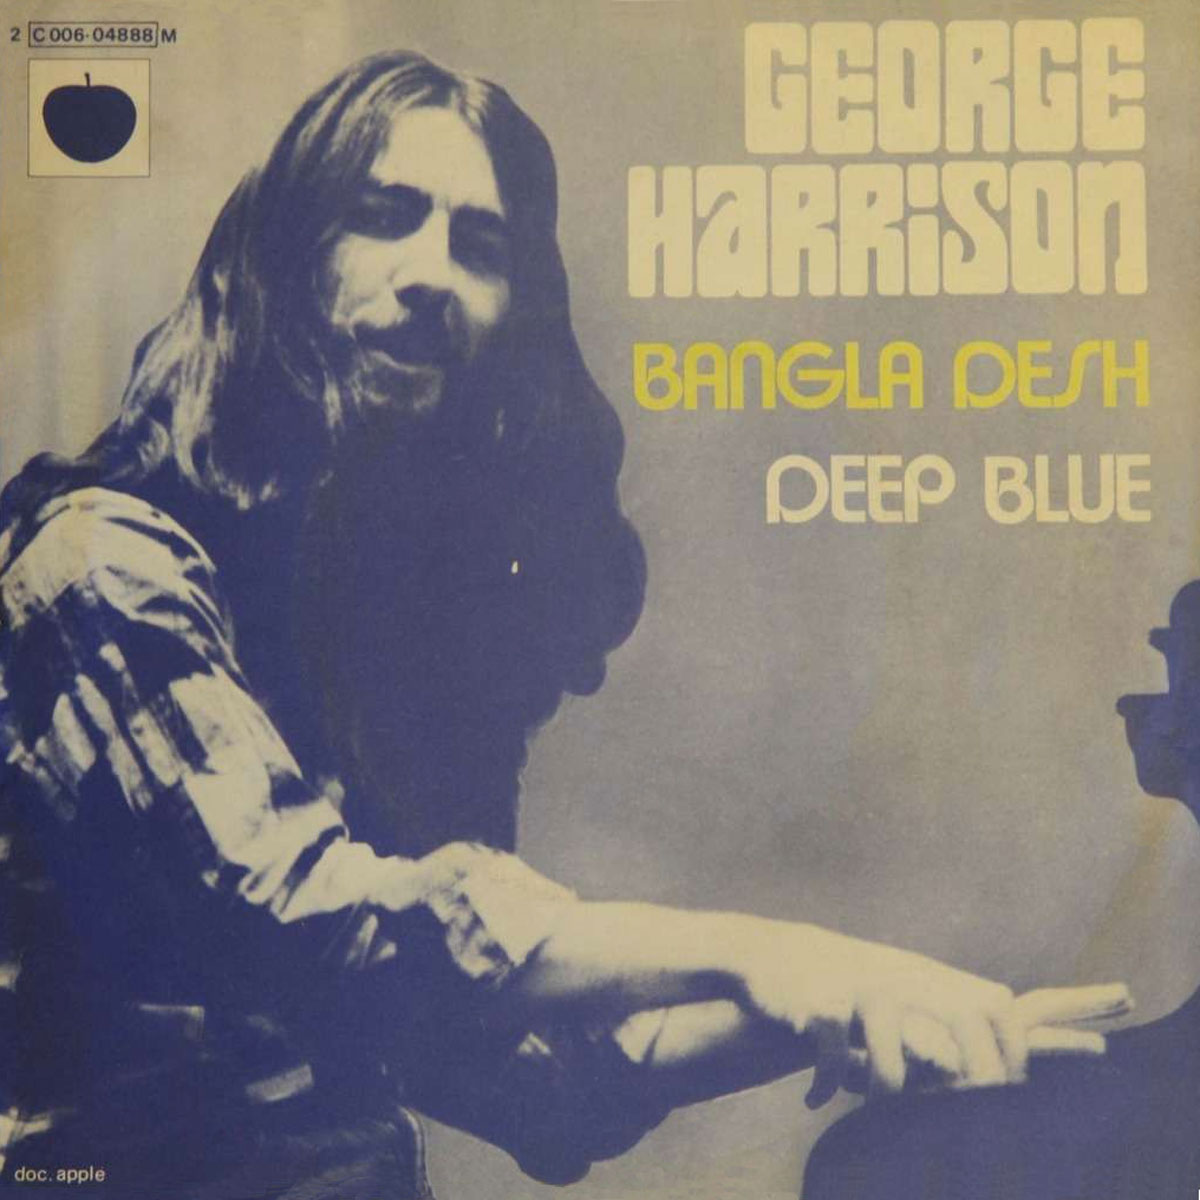 Deep Blue, George Harrison